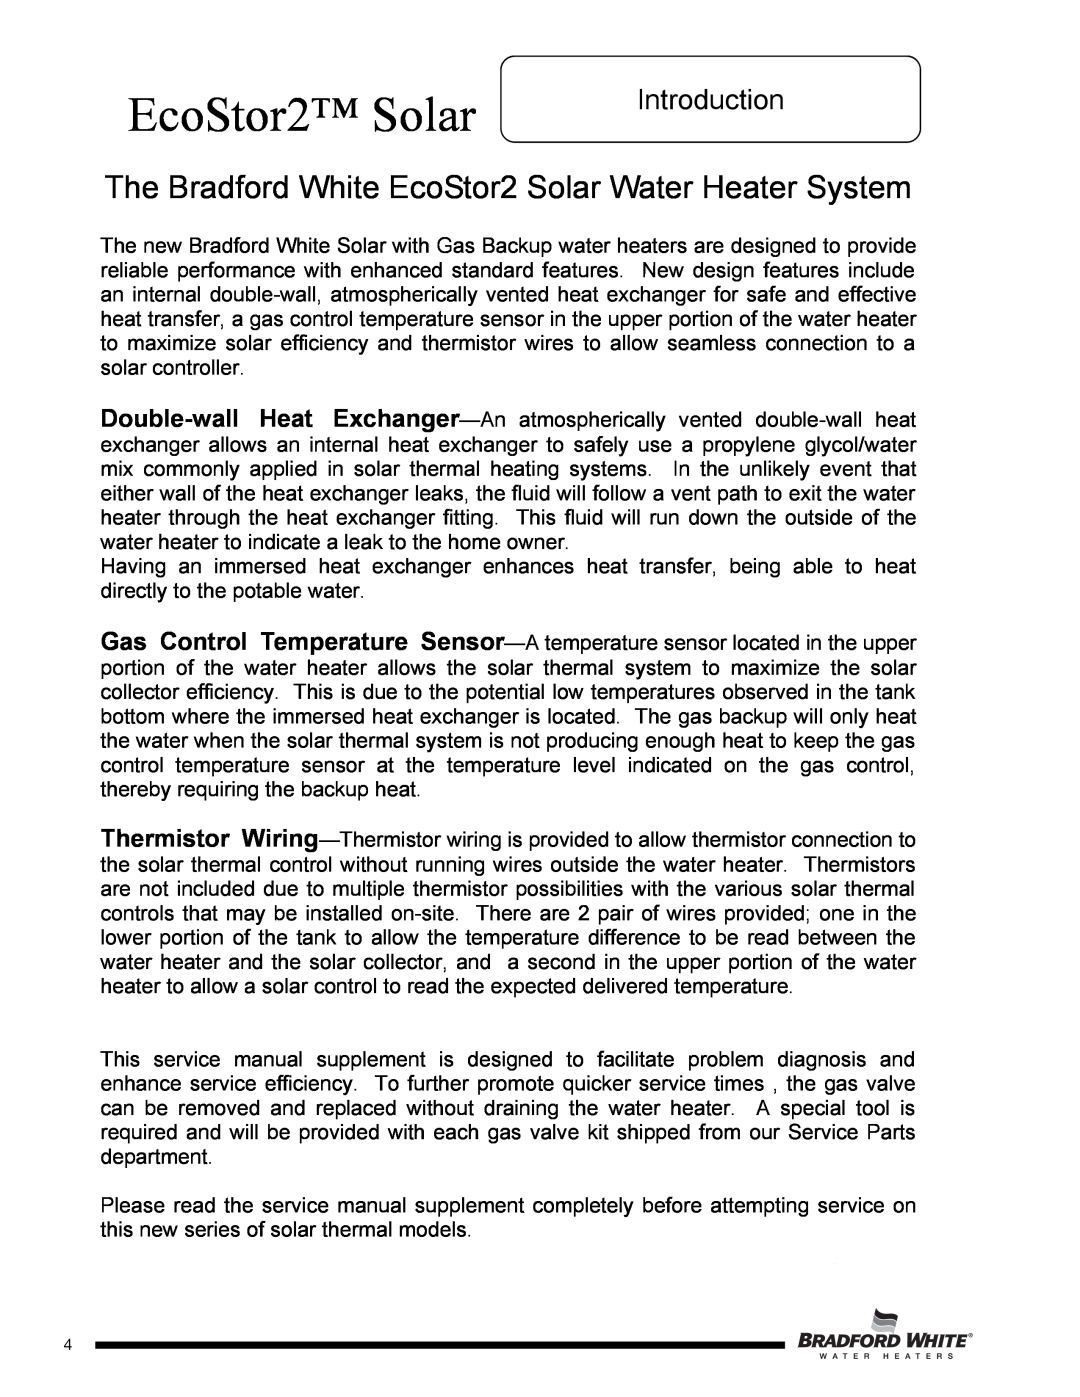 Bradford-White Corp SDW2TW50T, SDW265T, SDW275S The Bradford White EcoStor2 Solar Water Heater System, Introduction 